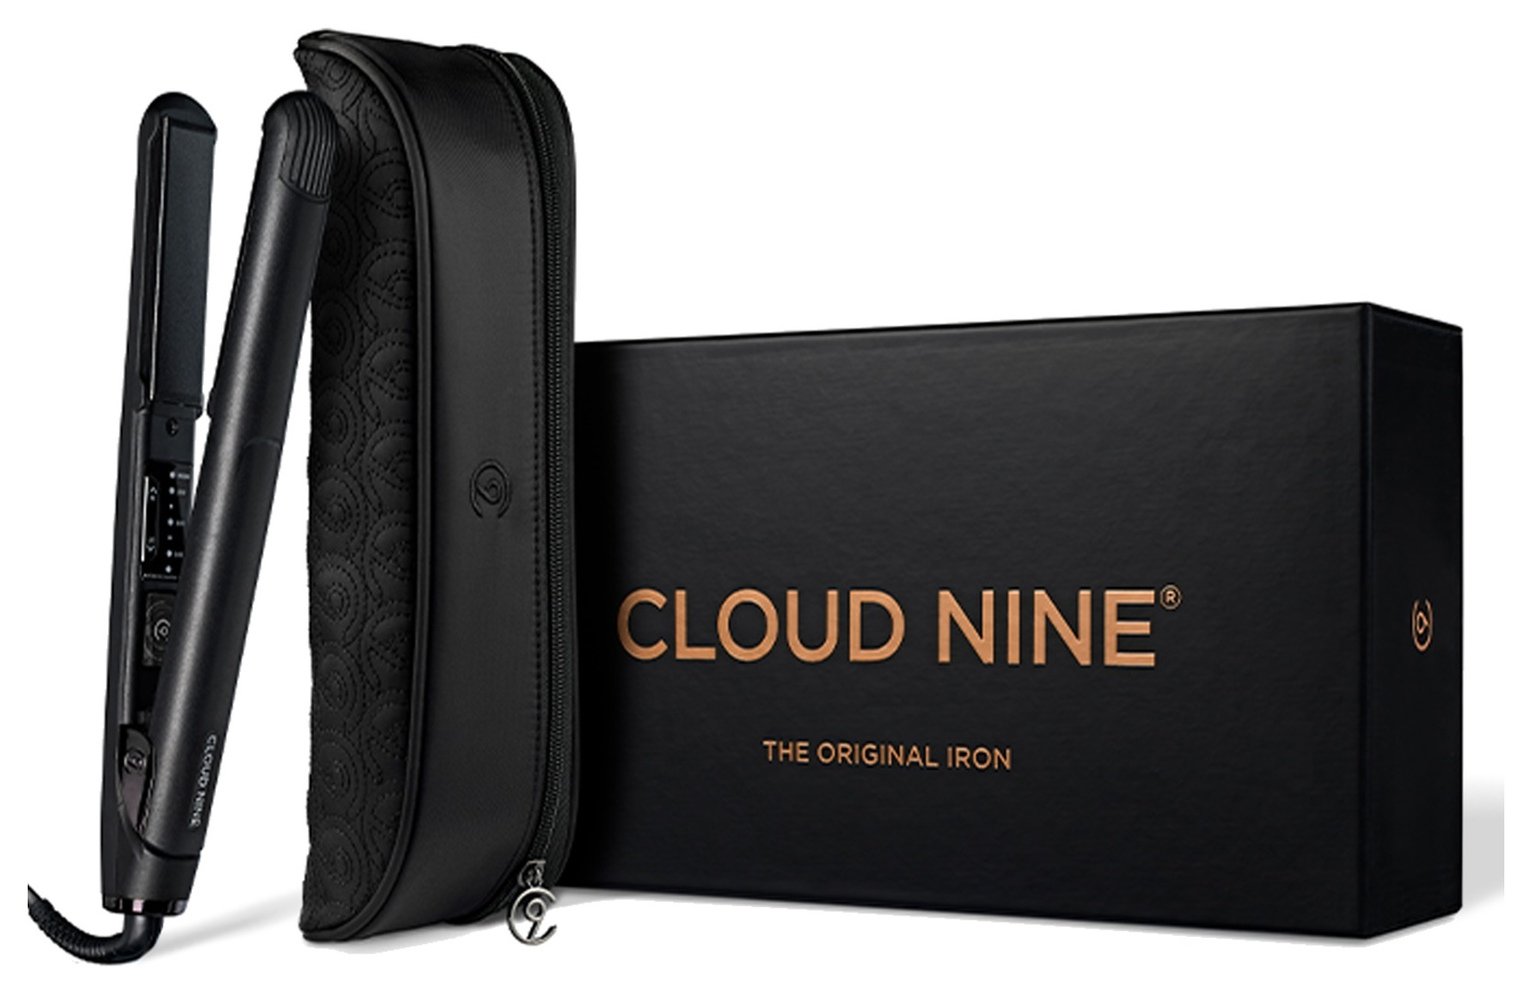 Cloud Nine The Original Iron Hair Straightener Gift Set